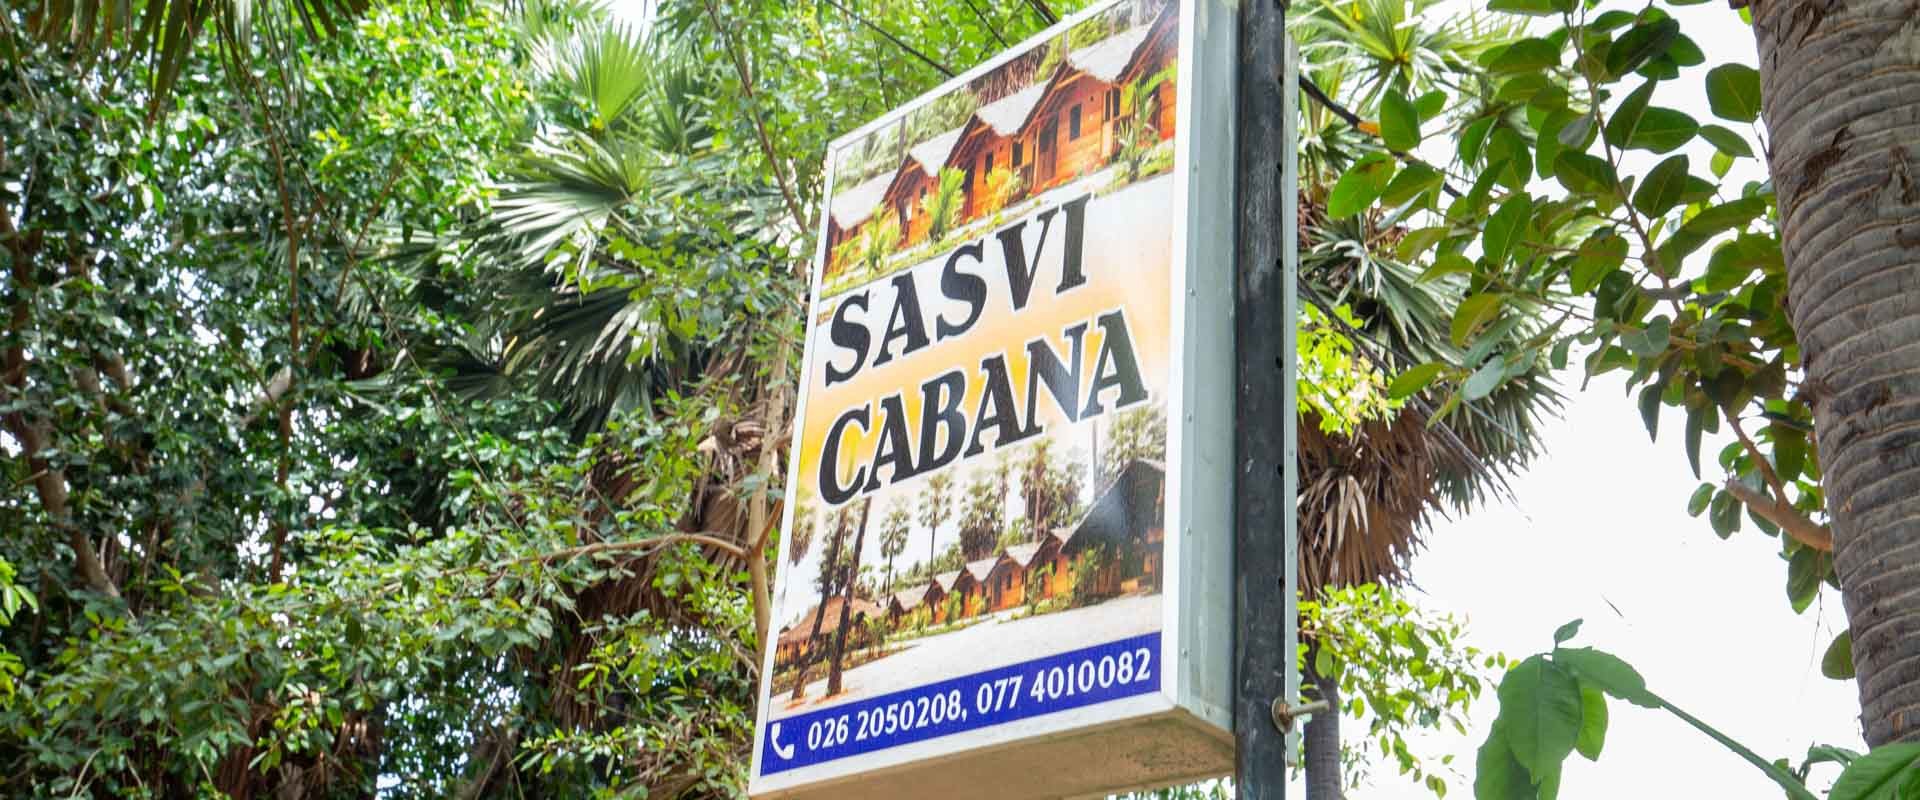 Sasvi Cabana - Gateway to East